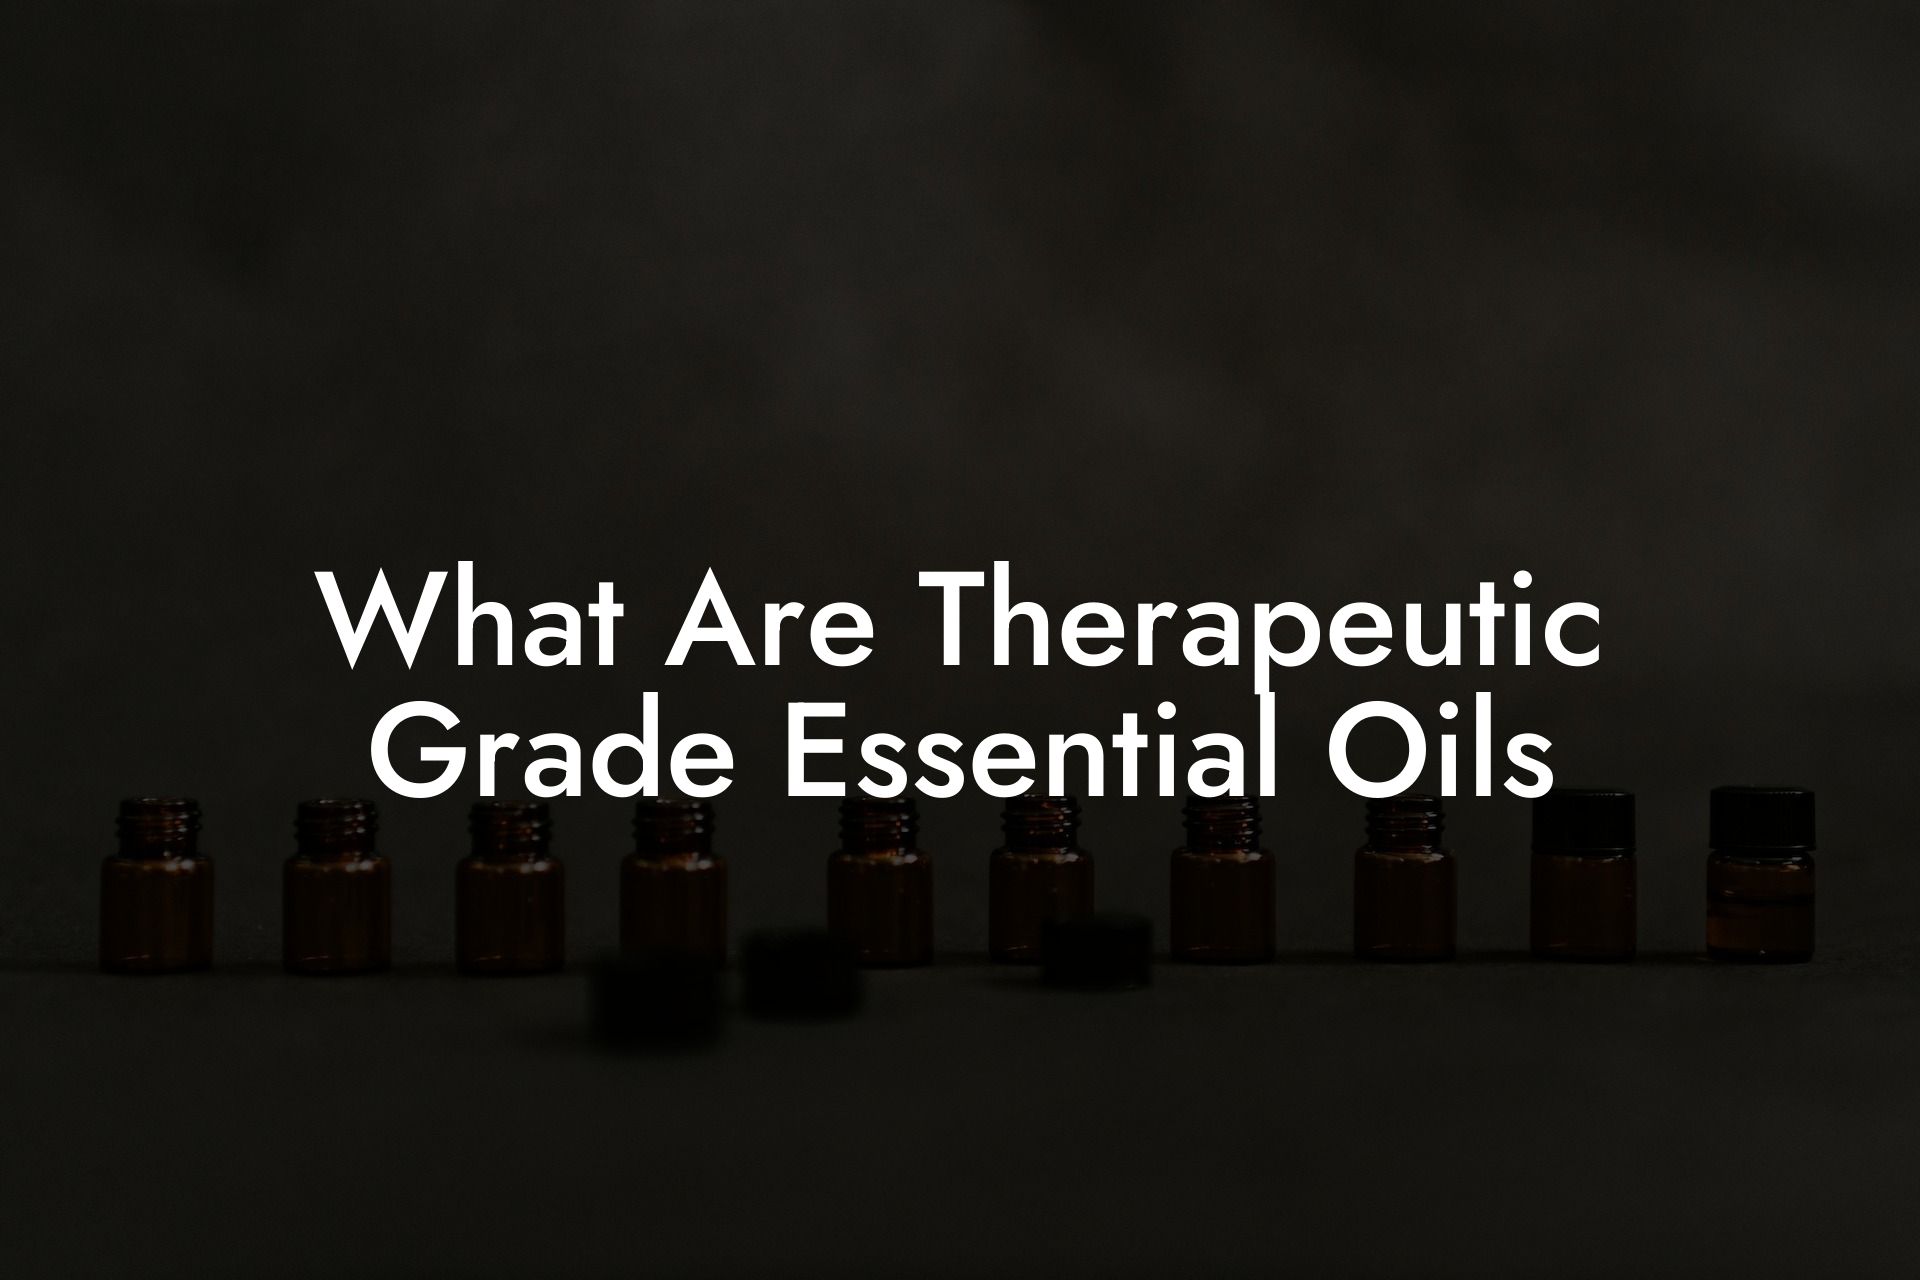 What Are Therapeutic Grade Essential Oils